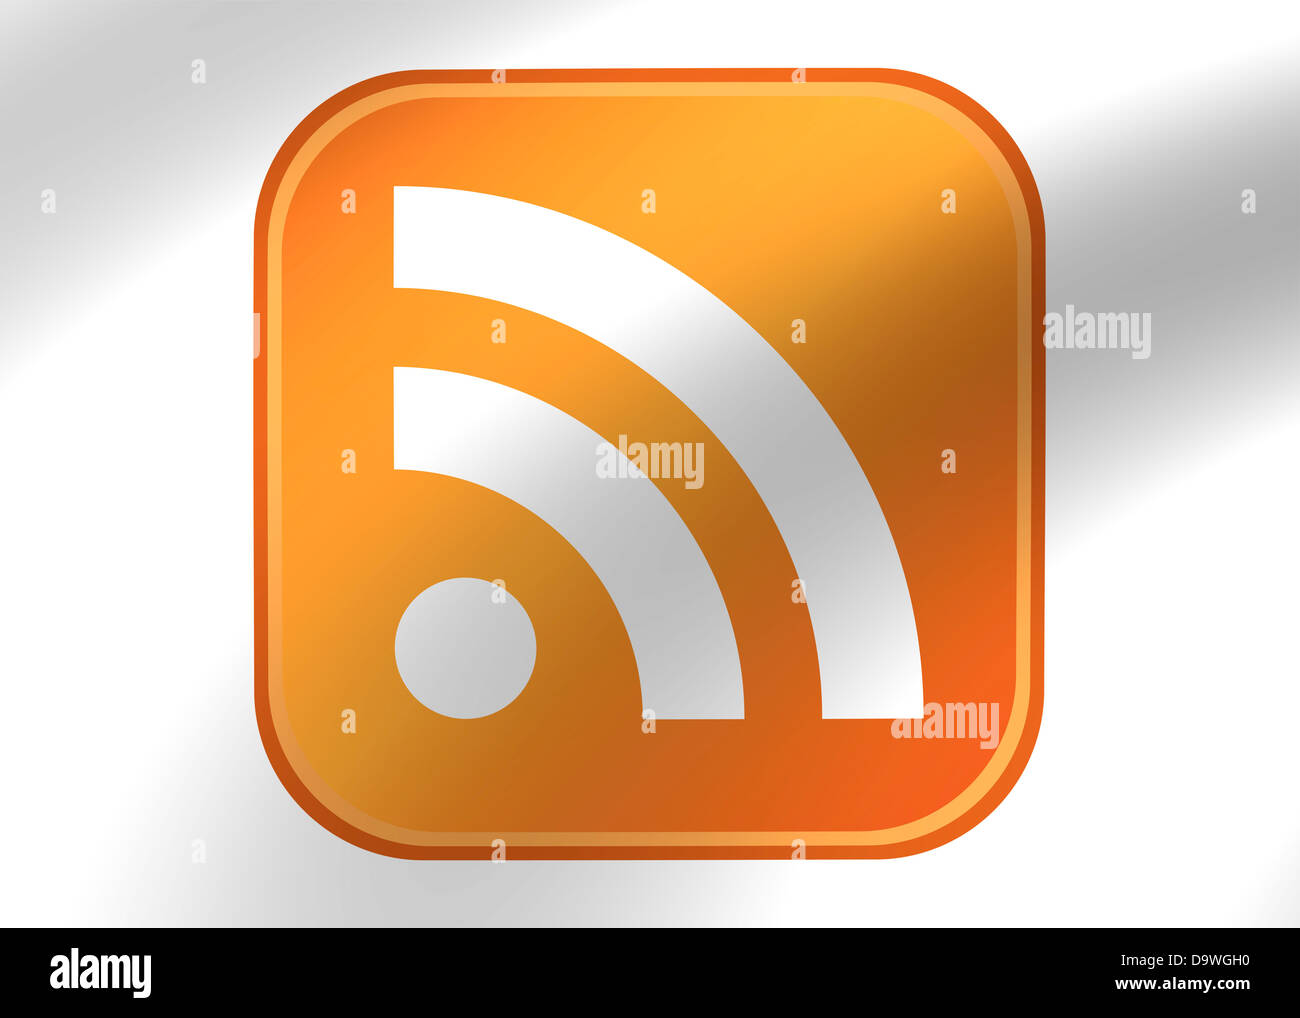 RSS / Really Simple Syndication logo icon symbol flag Stock Photo